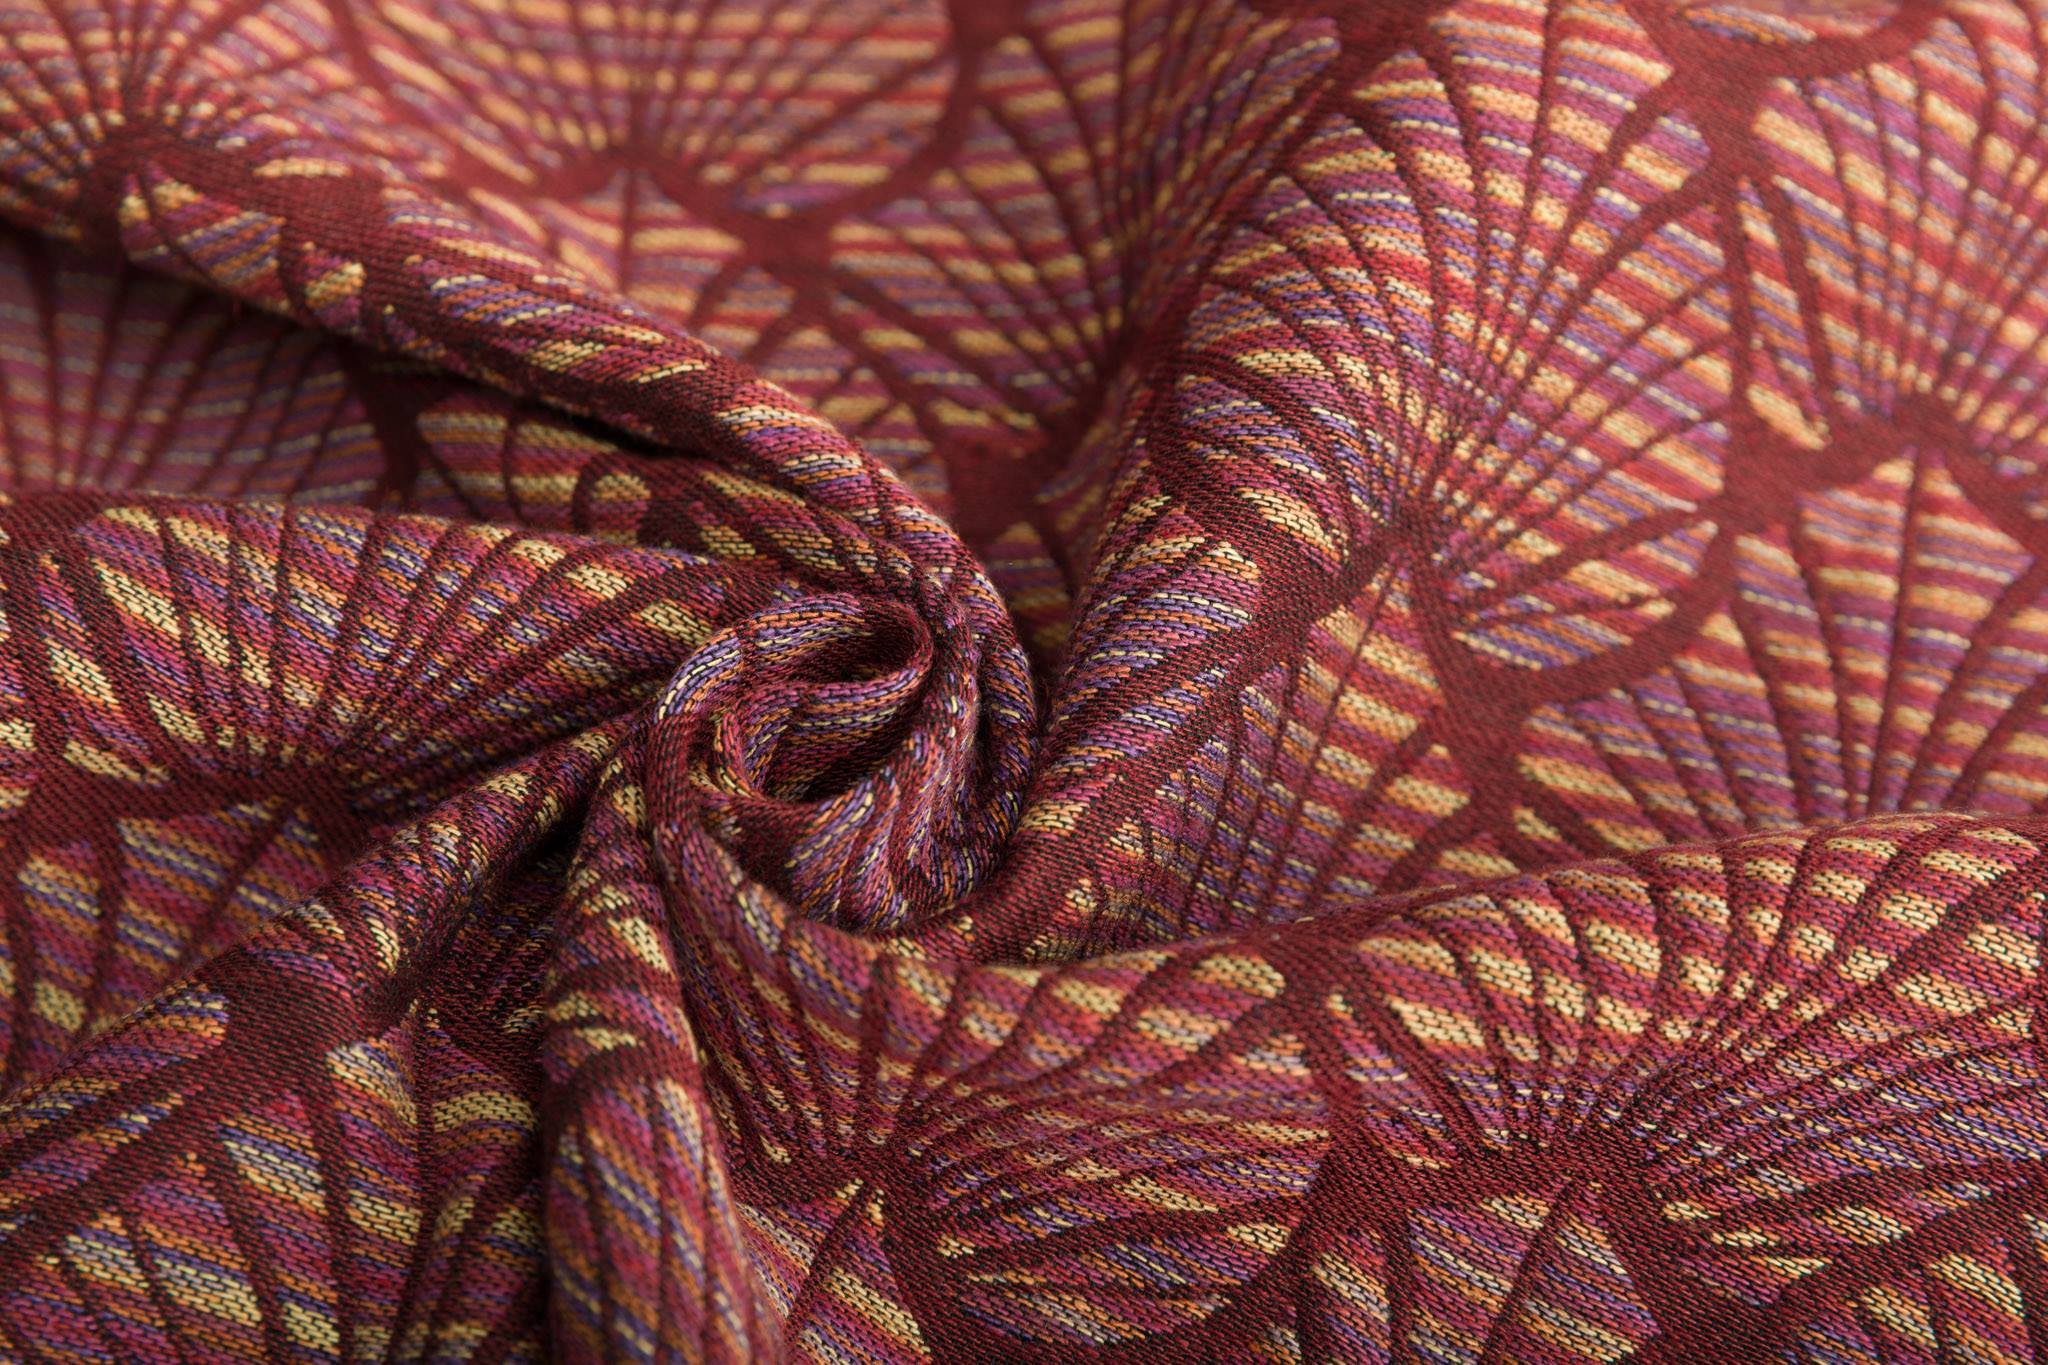 Tragetuch Linuschka Ipomée Ipomee Tierra De Siena (japanese silk, Wolle, Leinen, mulberry silk) Image